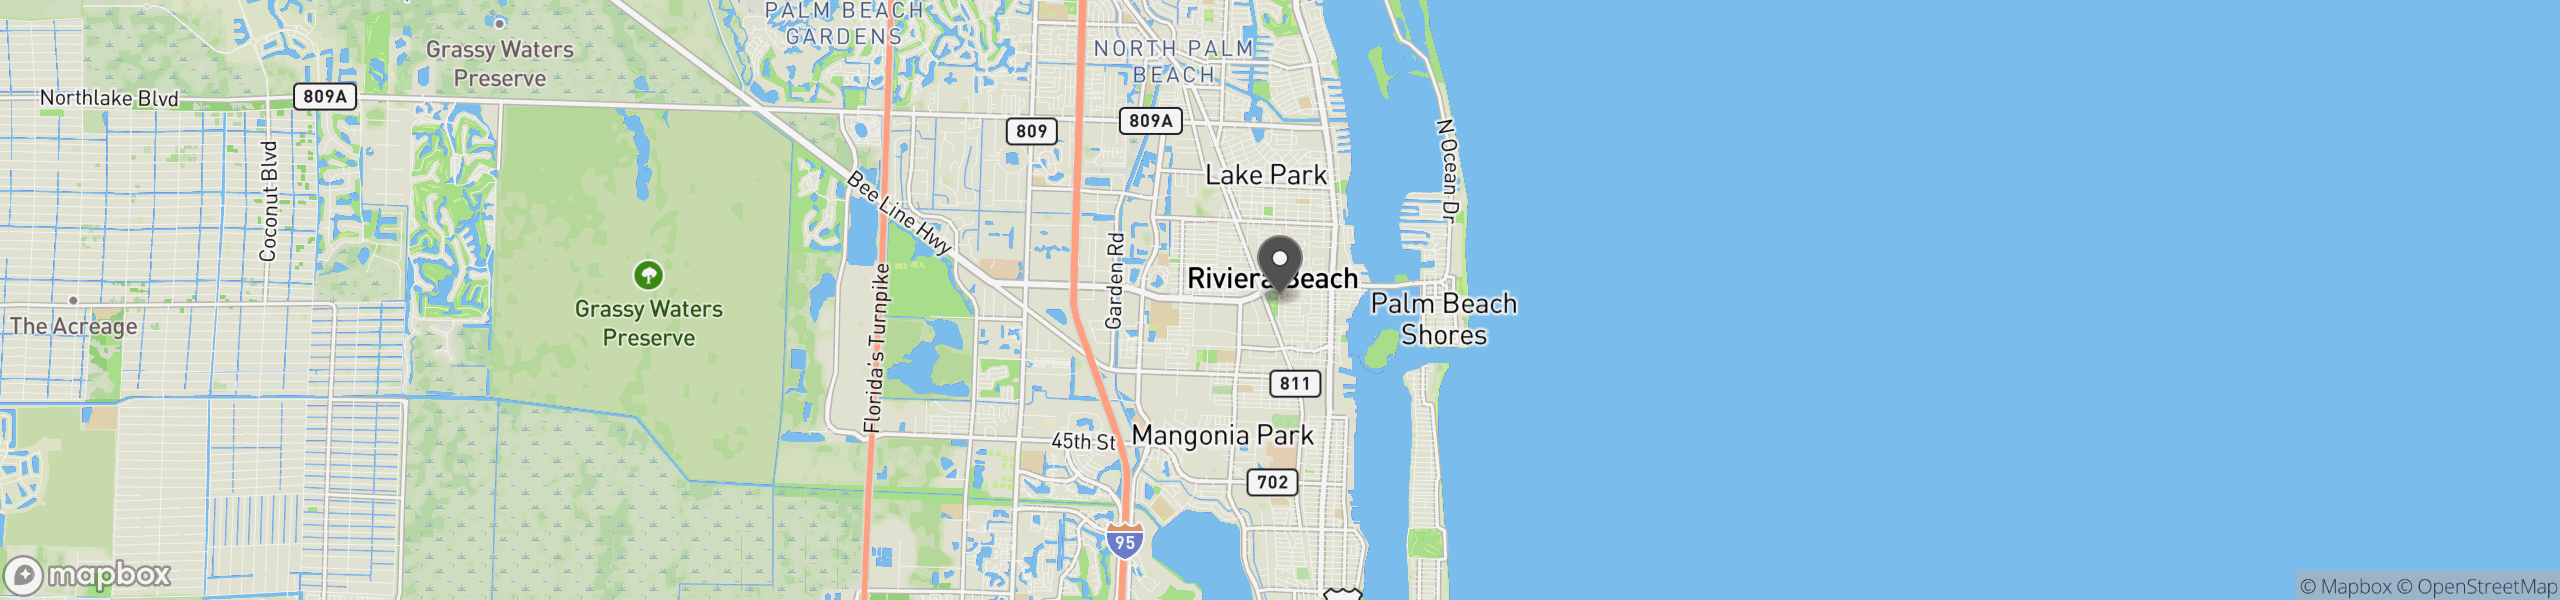 Riviera Beach, FL 33404